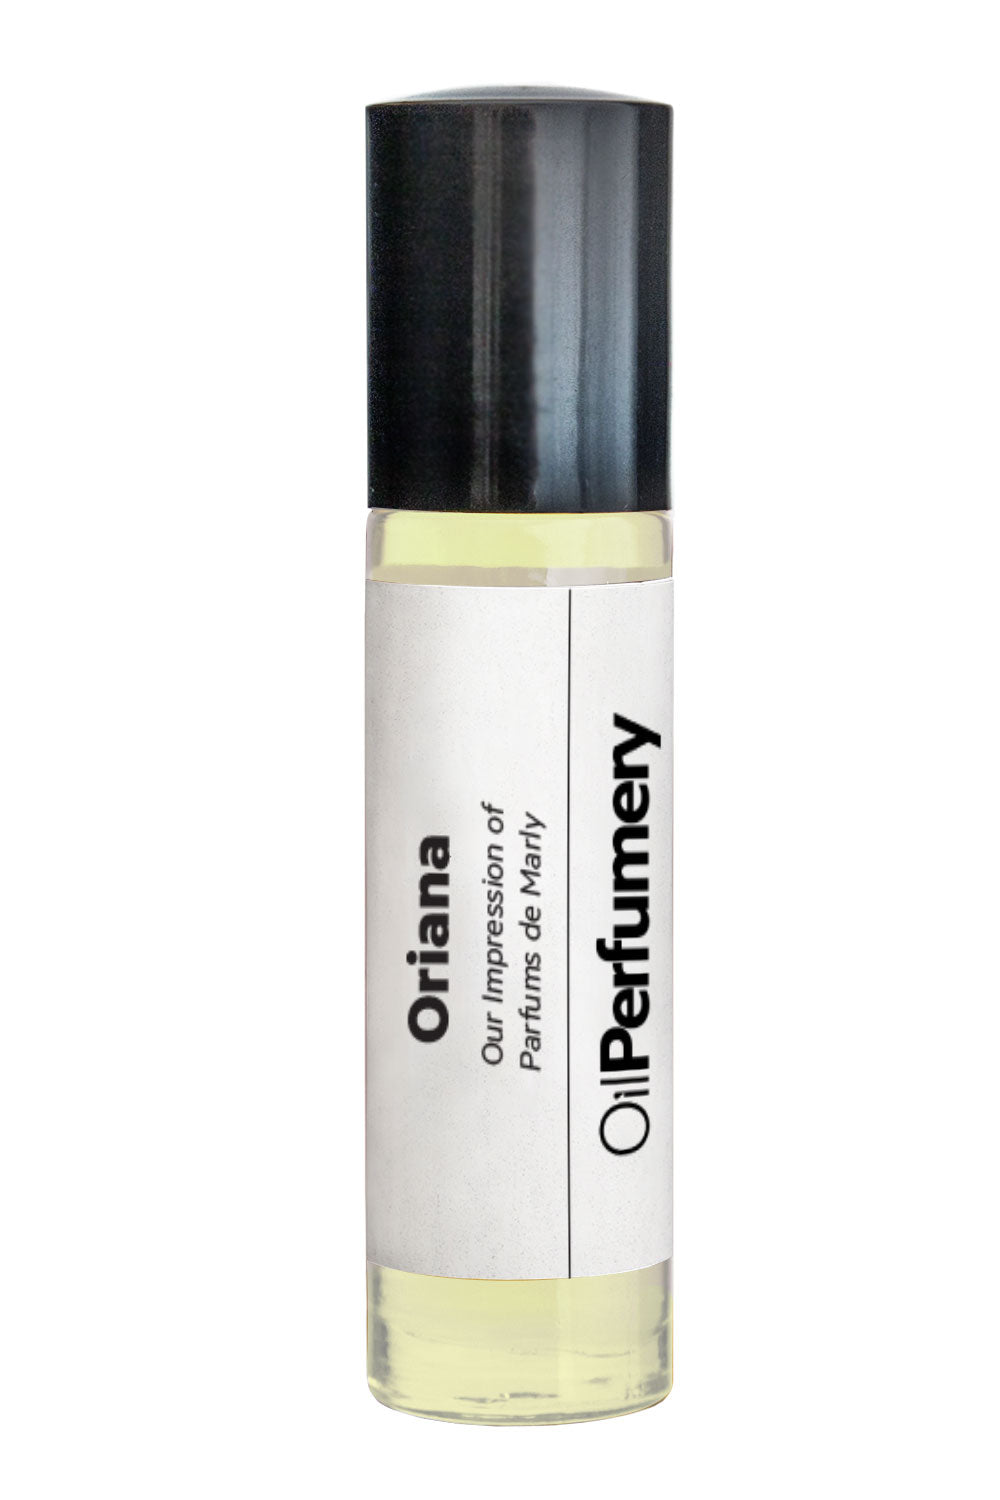 Oriana parfums de marly Oil Perfumery